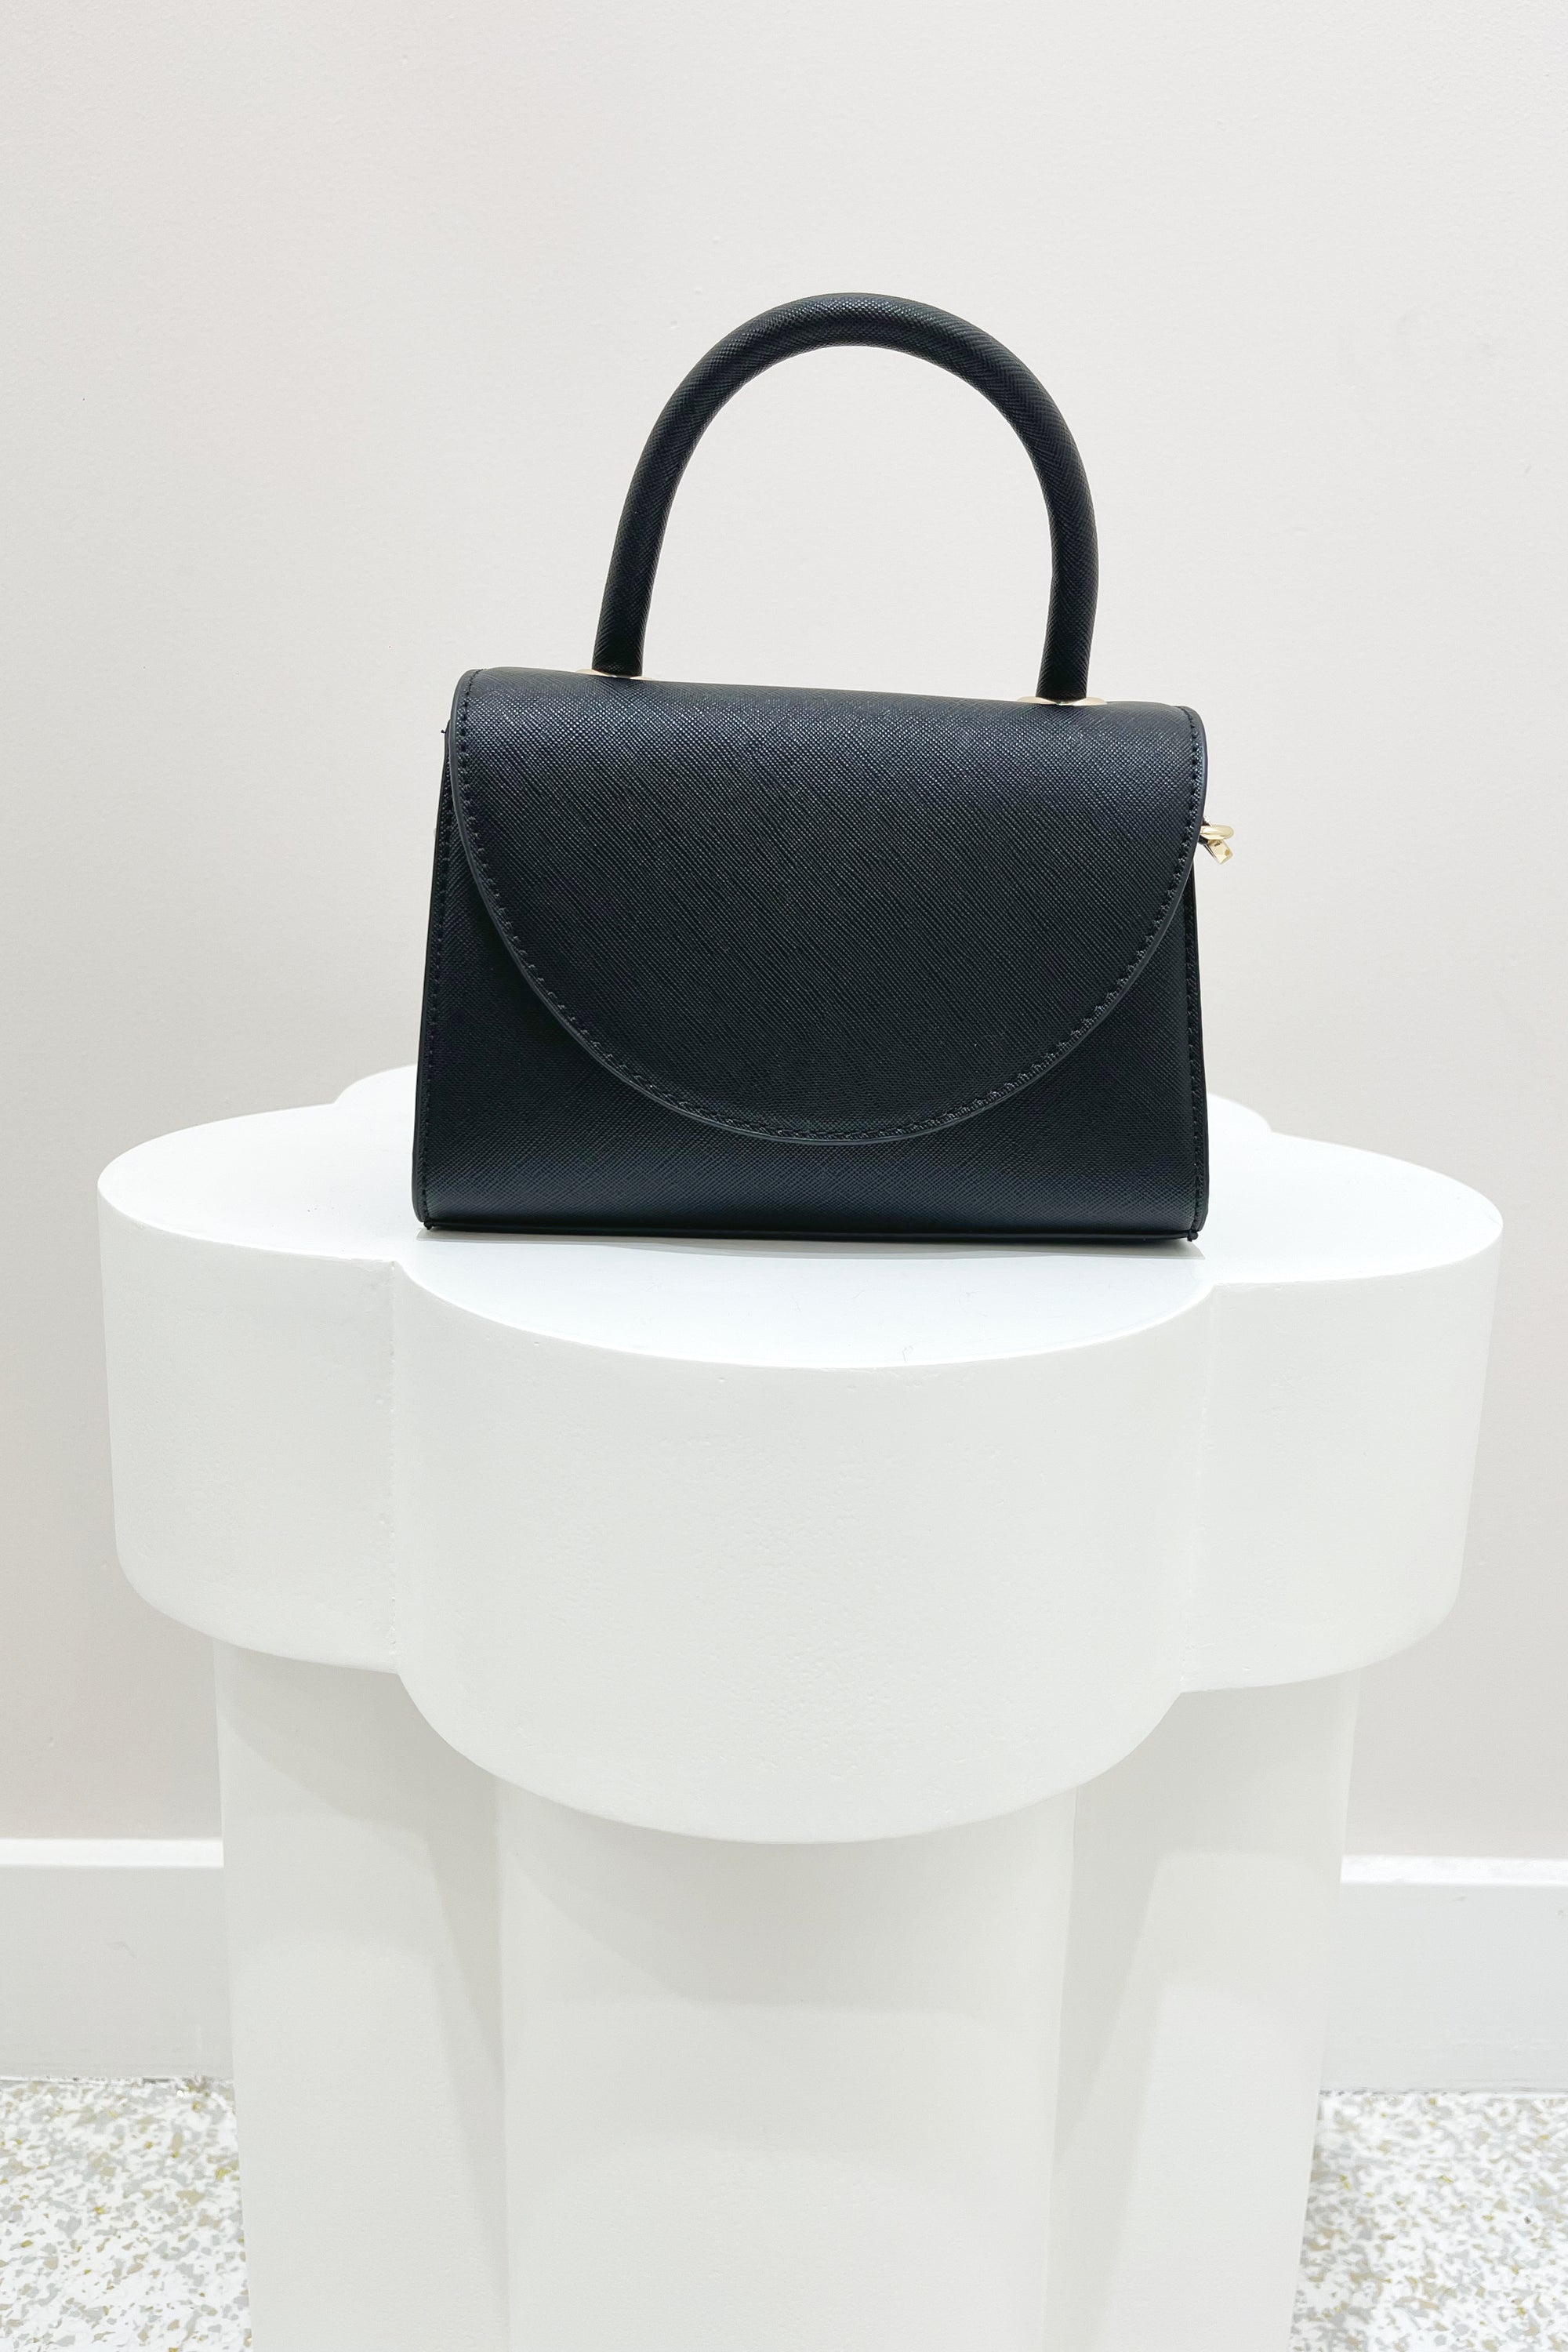 Olga Berg Sasha Top Handle Bag | Black